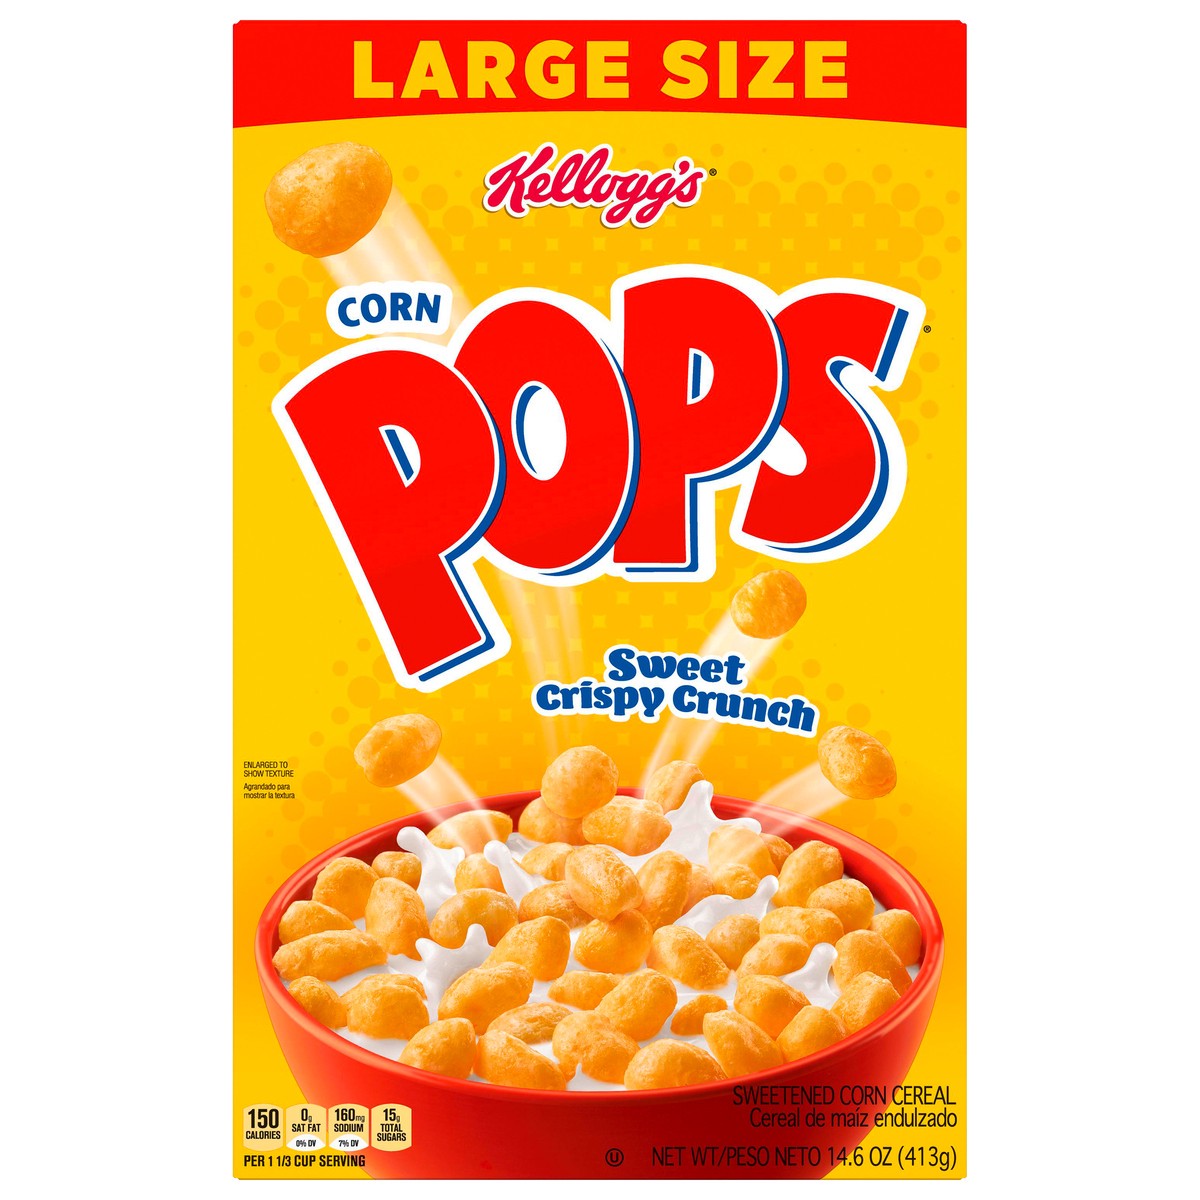 slide 1 of 8, Corn Pops Kellogg's Corn Pops Breakfast Cereal, 8 Vitamins and Minerals, Kids Snacks, Large Size, Original, 14.6oz Box, 1 Box, 14.6 oz